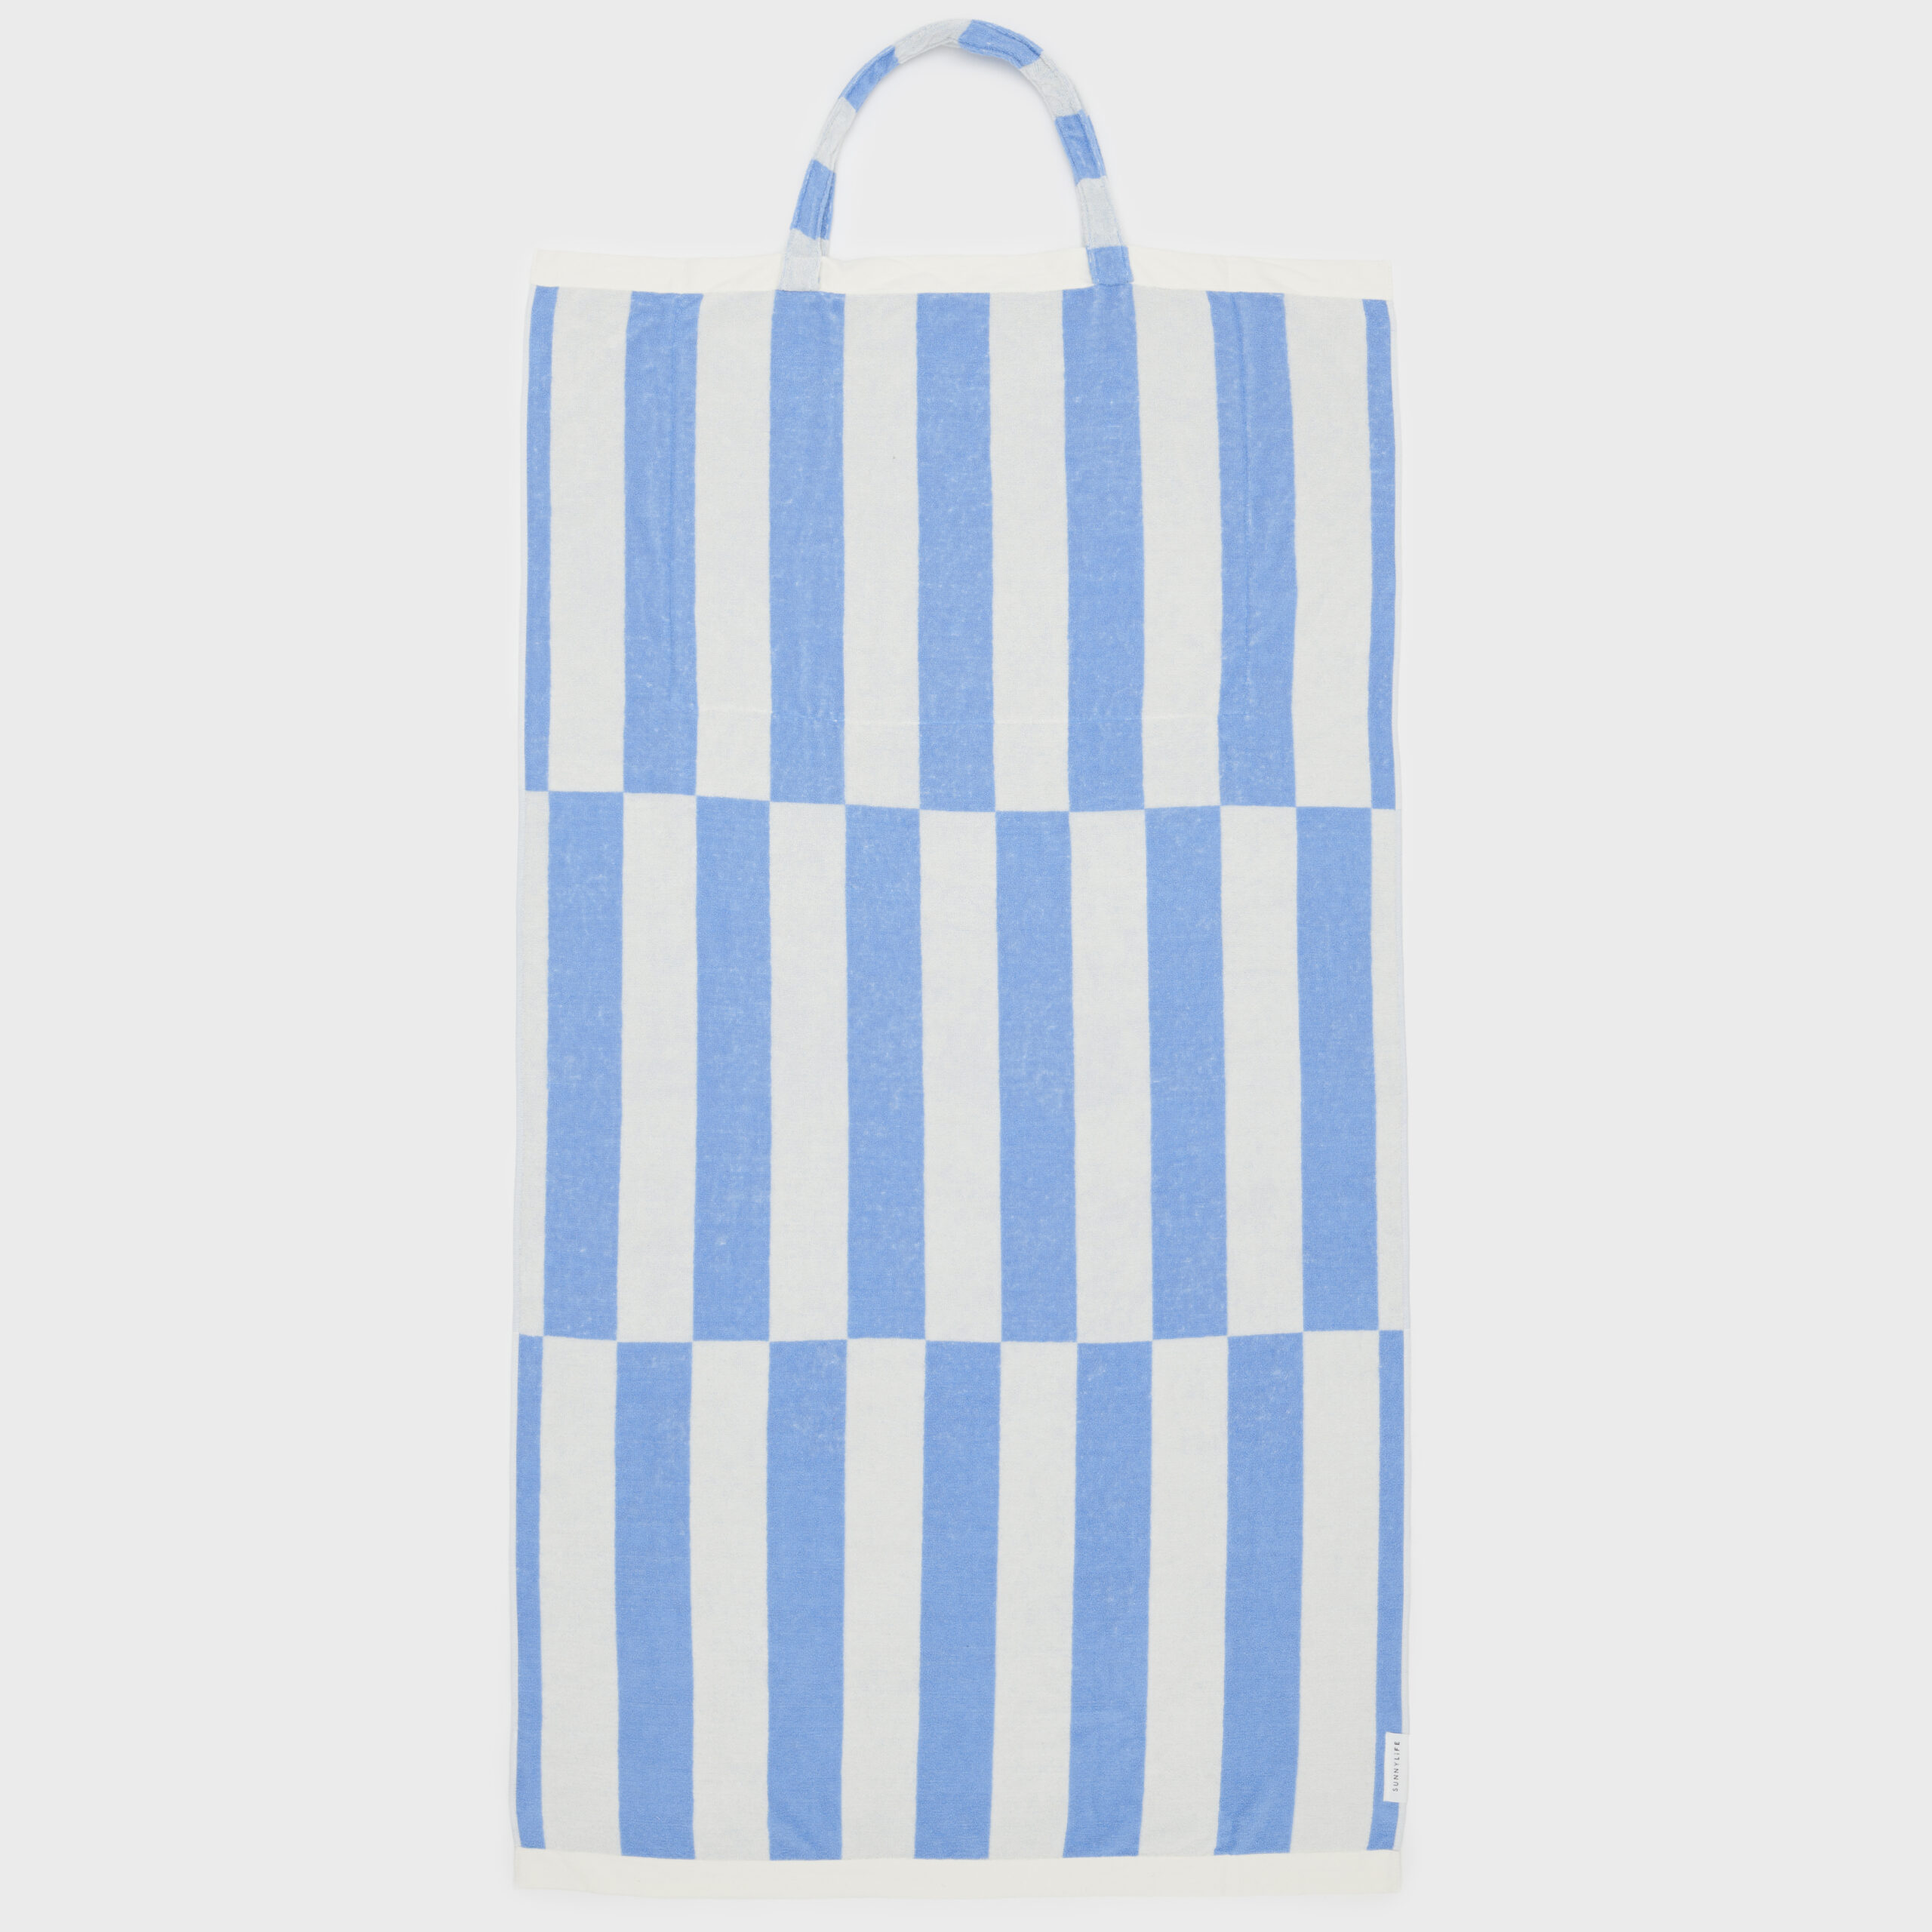 SunnyLife Blue Beach Towel 2-in-1 Tote Bag